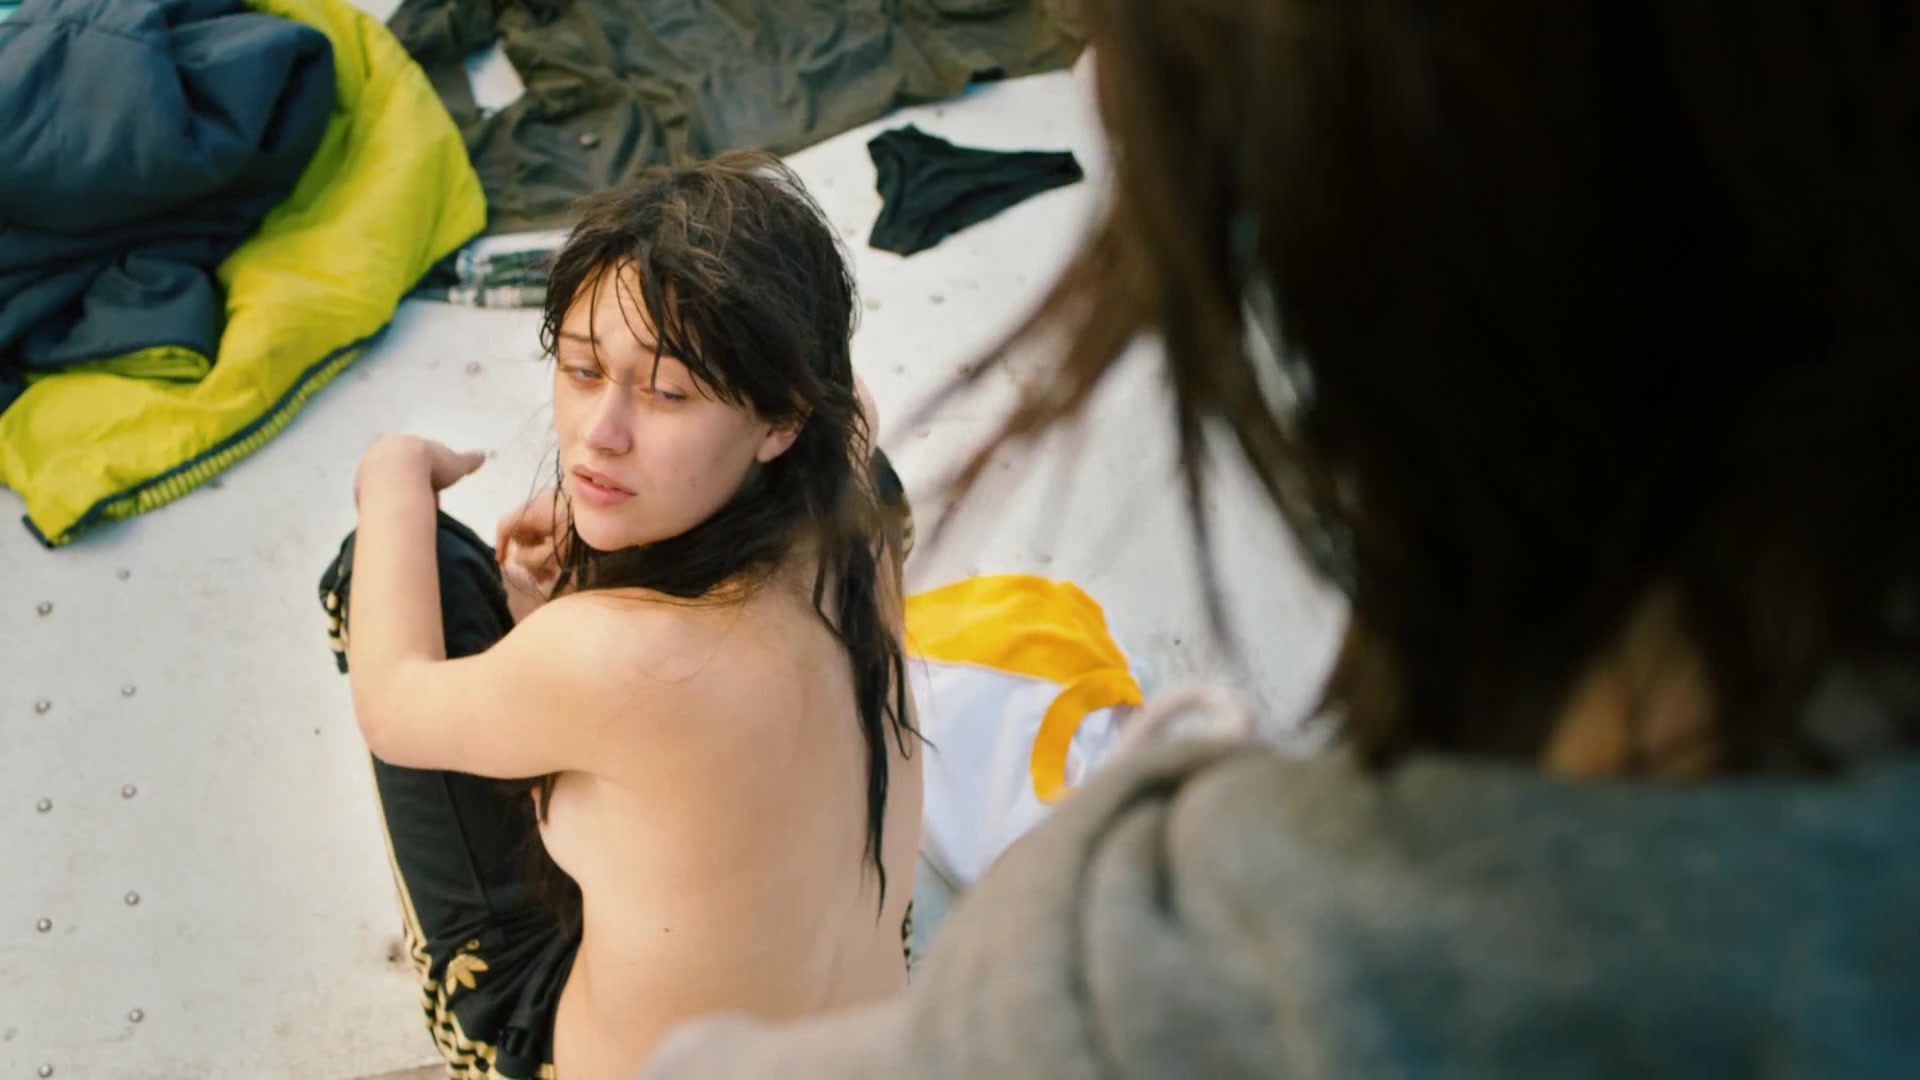 Download or Watch Online: Mercedes Müller nude in Tschick (2016)